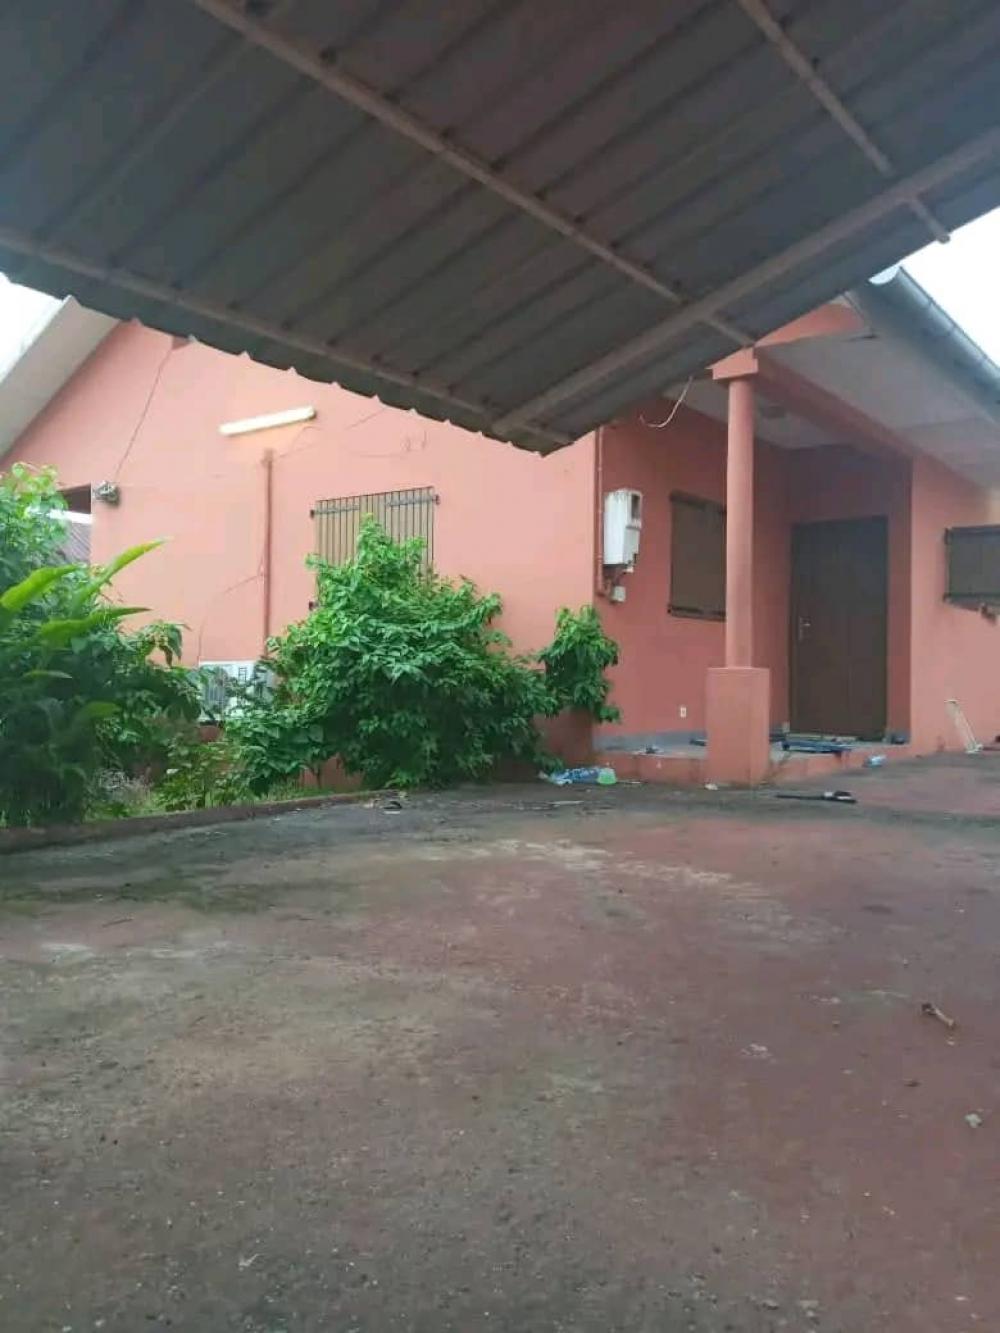 Villa 3 chambres à louer à Akanda, Angondjé. Prix: 500 000 FcfaPhoto Annonce Gabonhome 